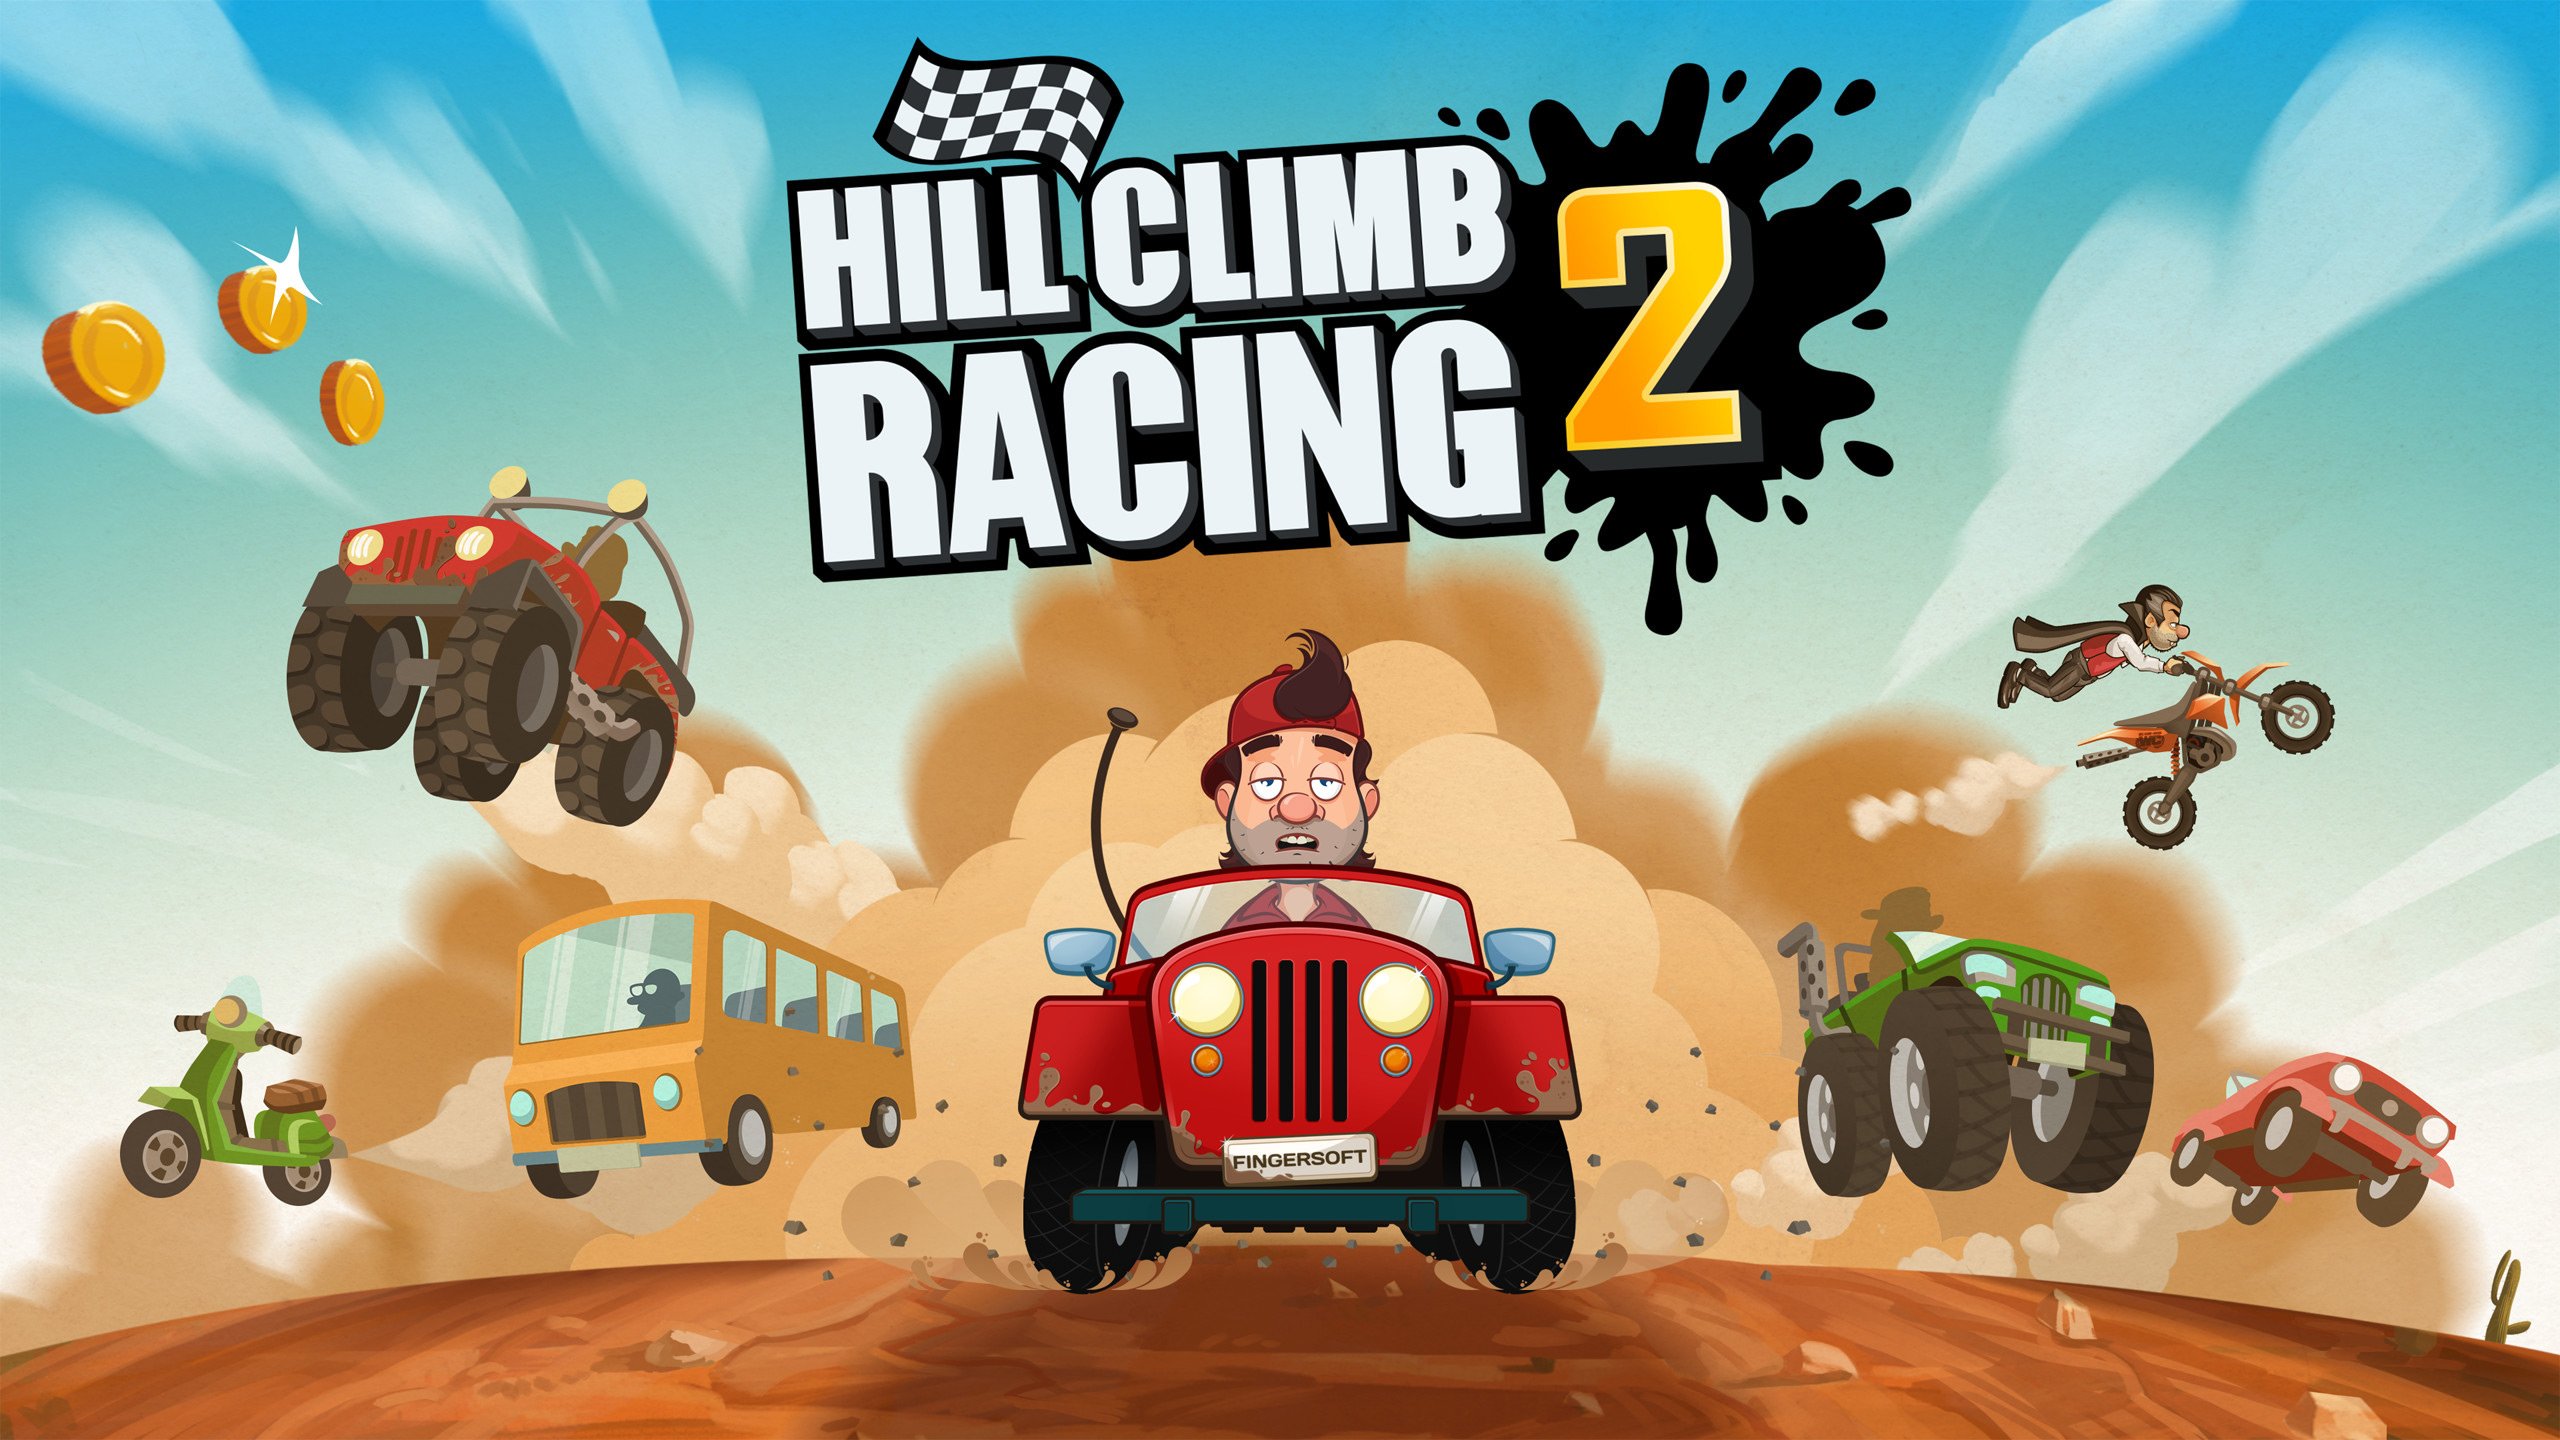 Hill Climb Racing 2 Tips, Cheats and Strategies – Gamezebo